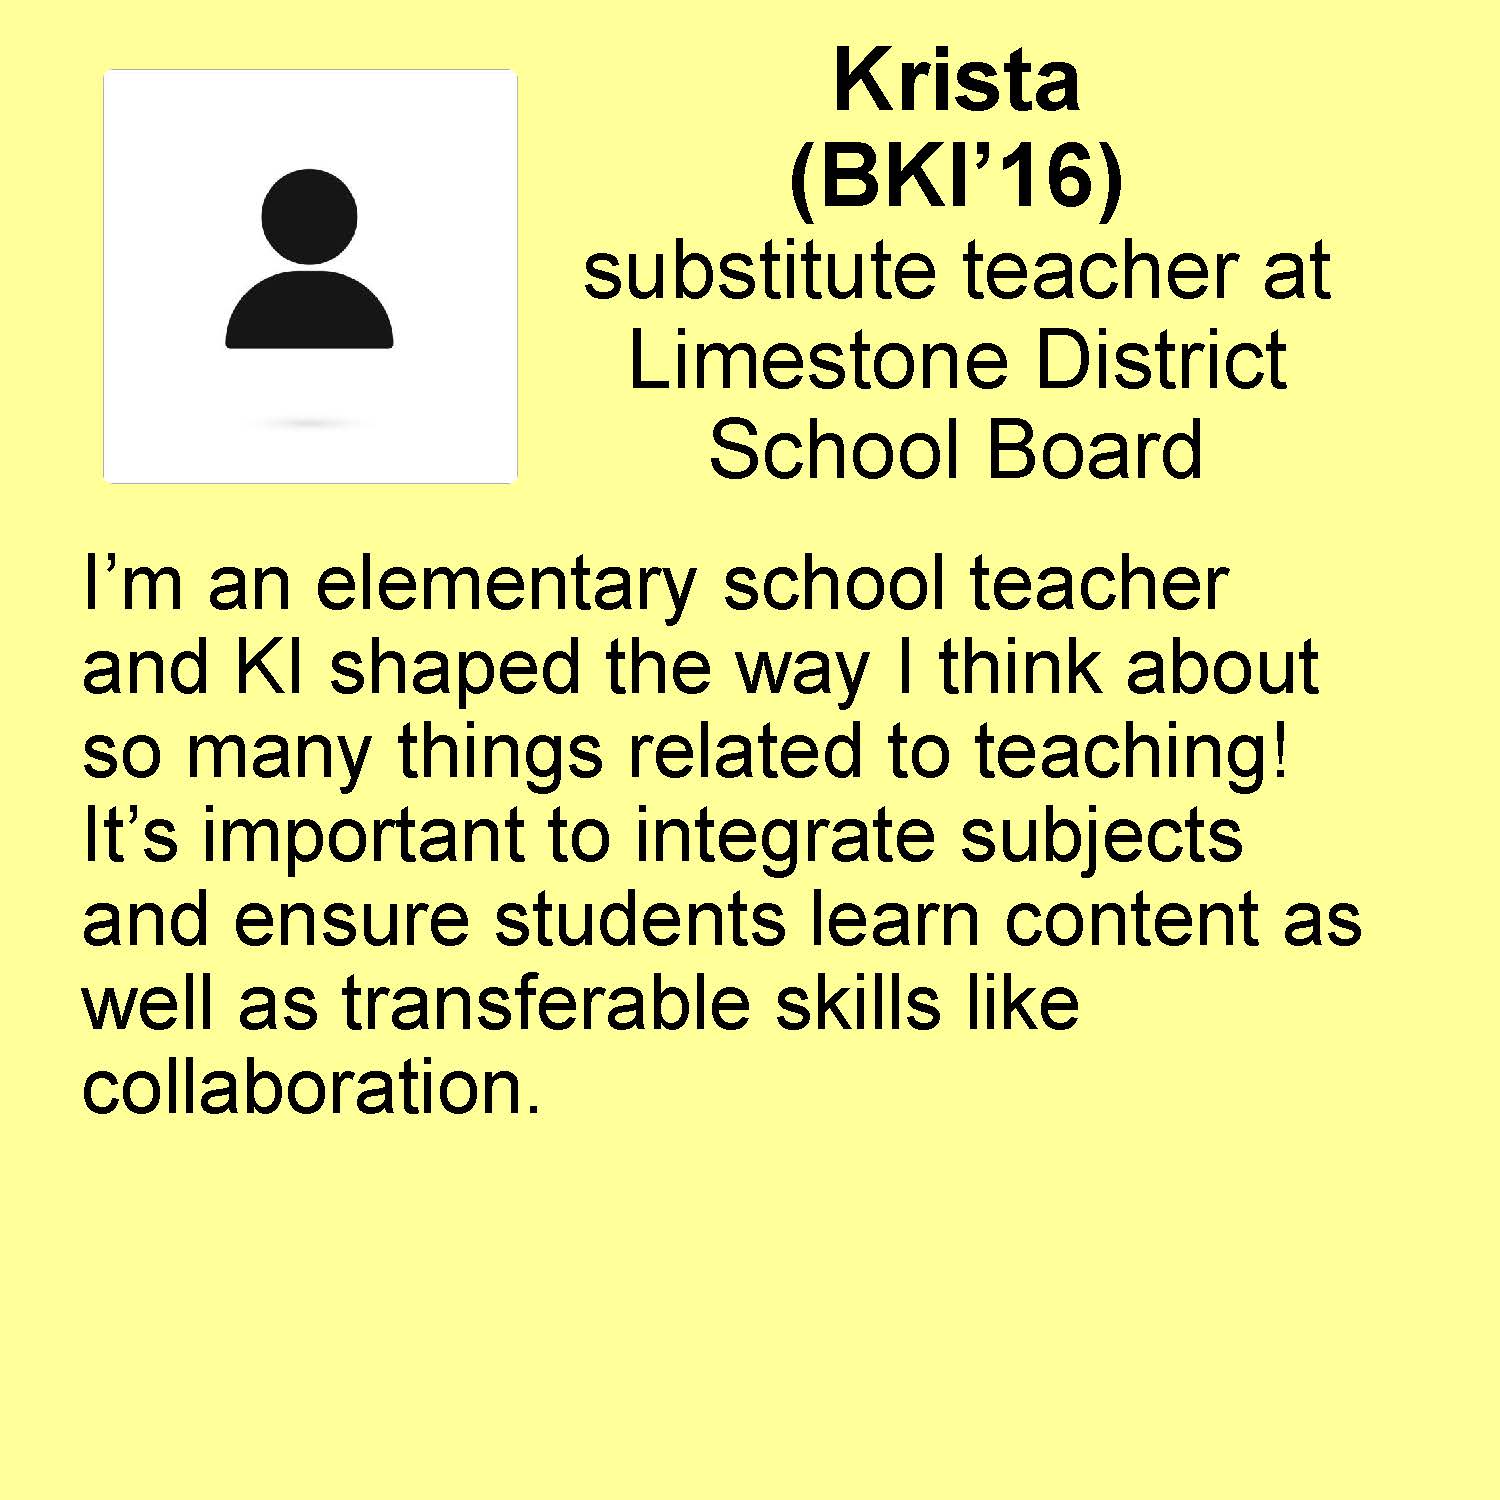 Krista profile substitute teacher at Limestone District School Board